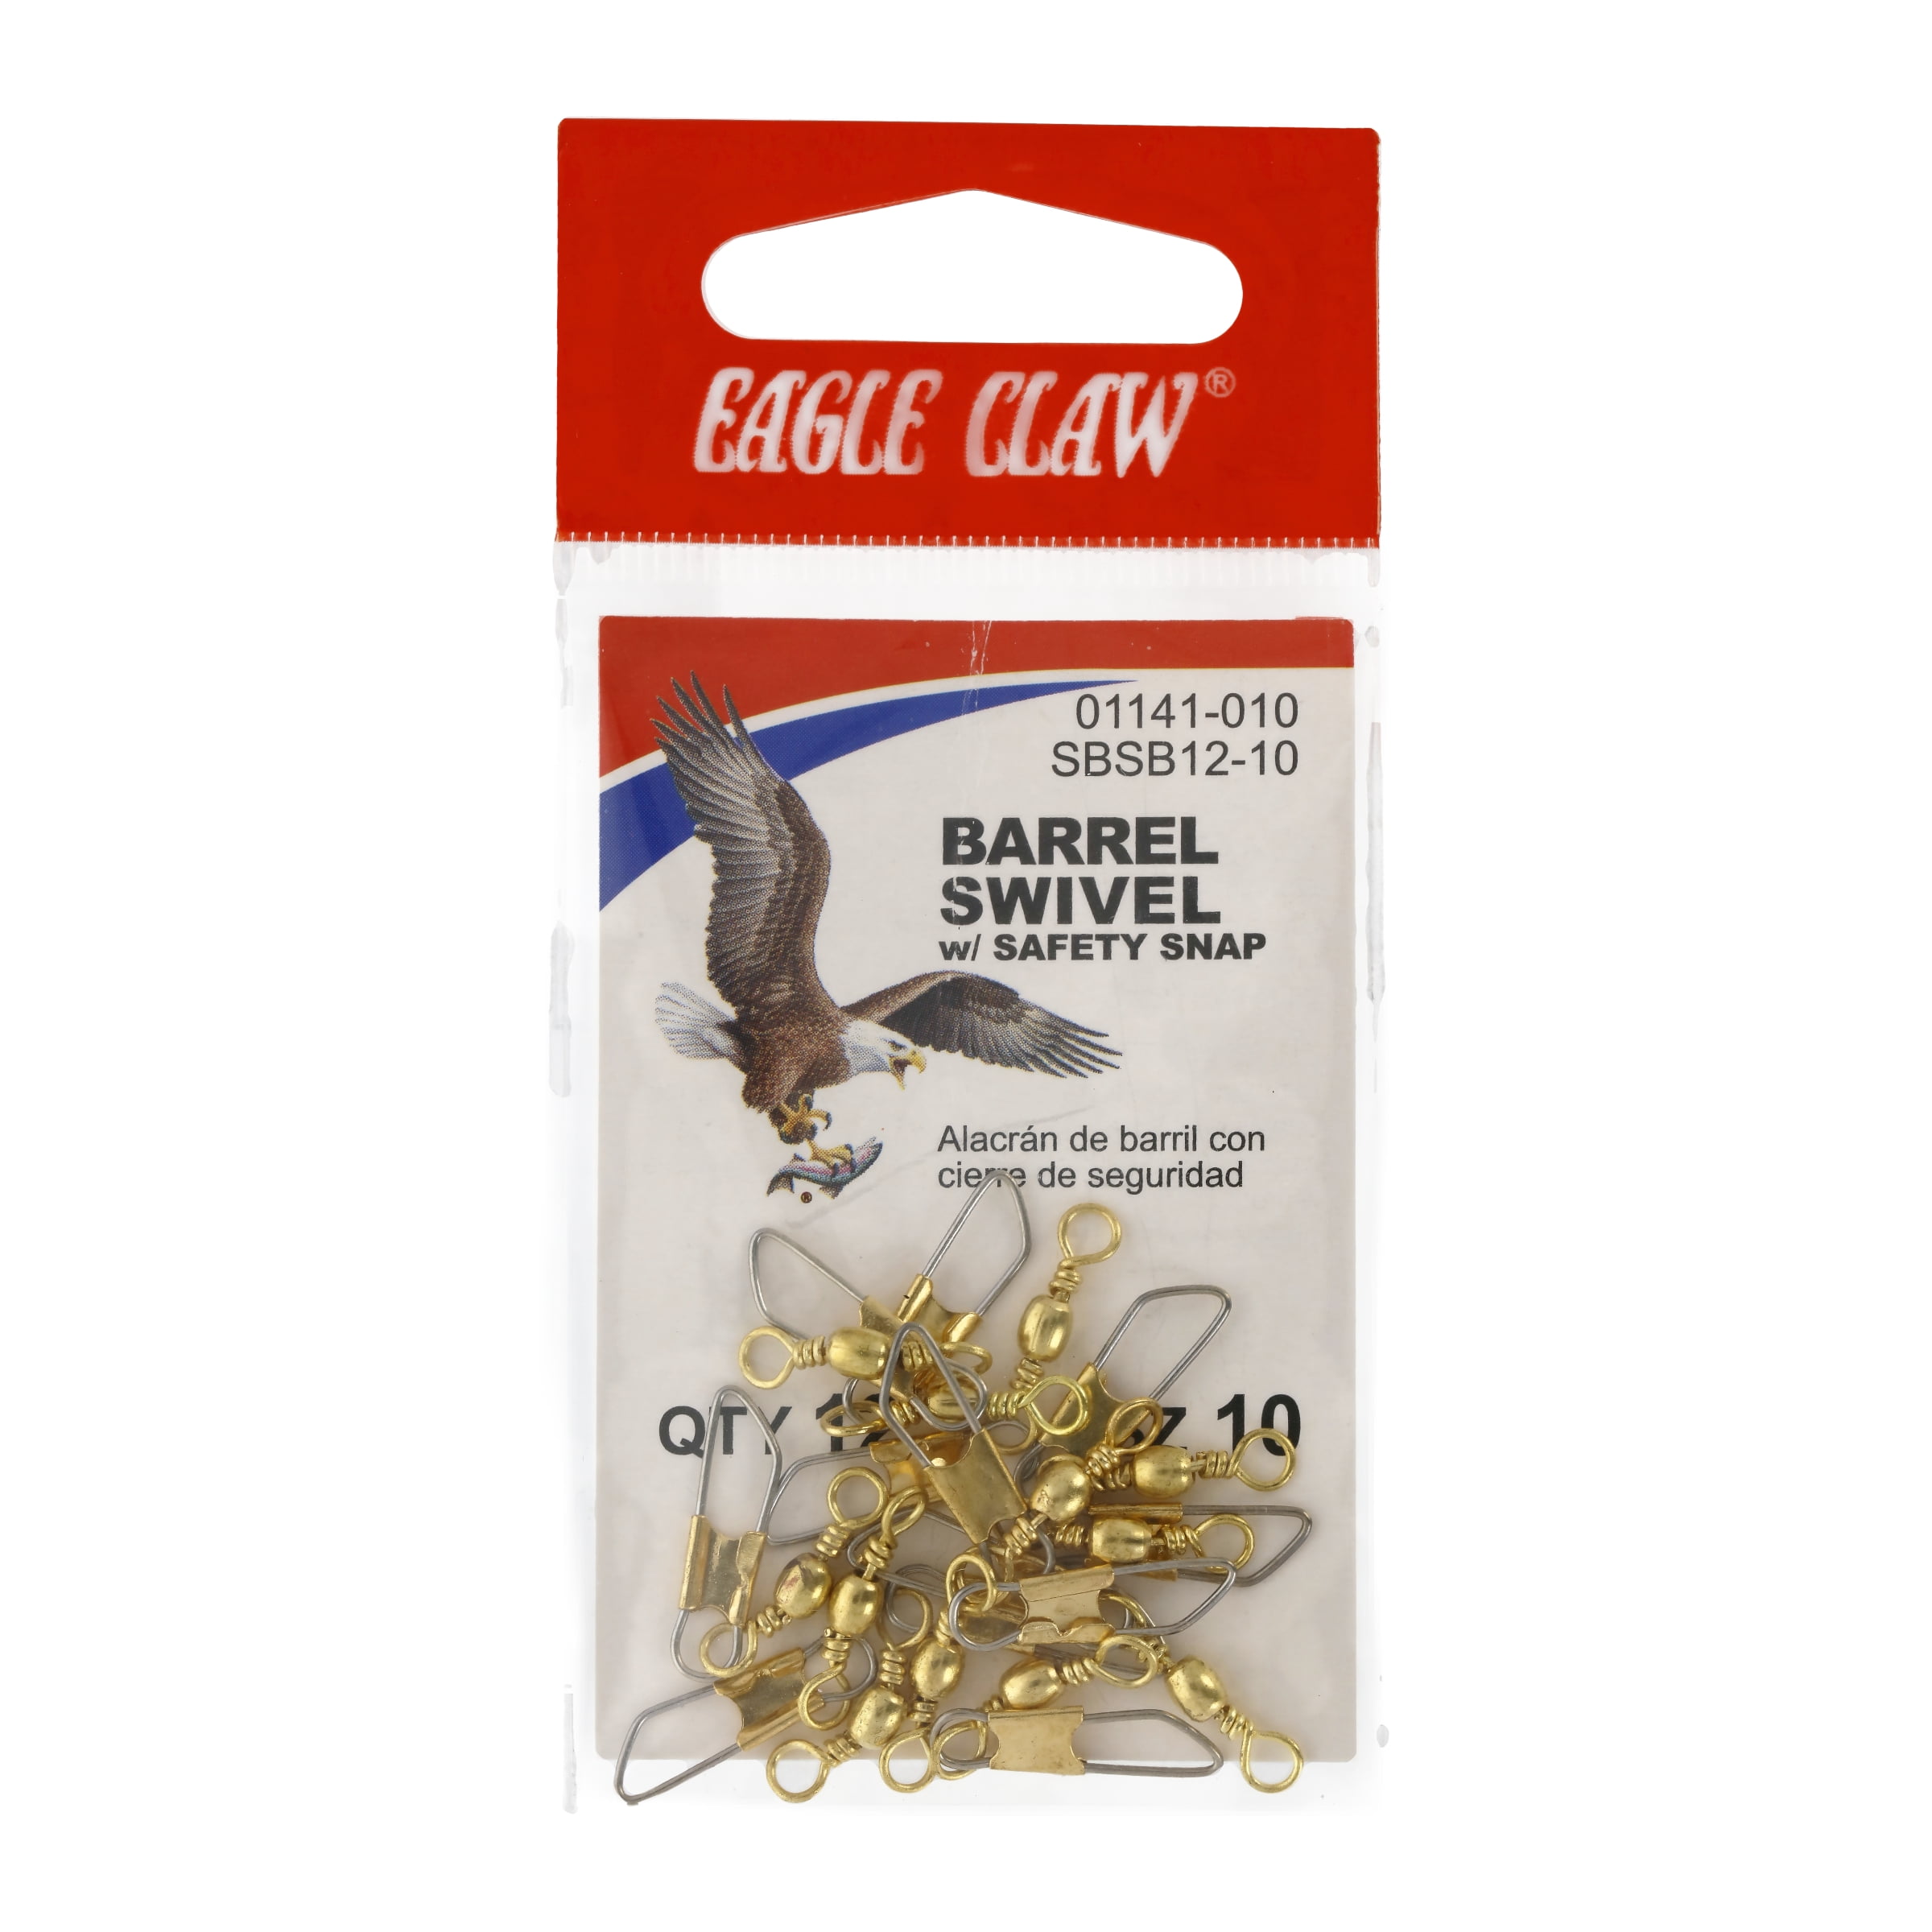 EAGLE CLAW DIAL PACK ASSORTMENT BARREL SWIVEL INTERLOCK SNAP 20 PIECE 01182-003 